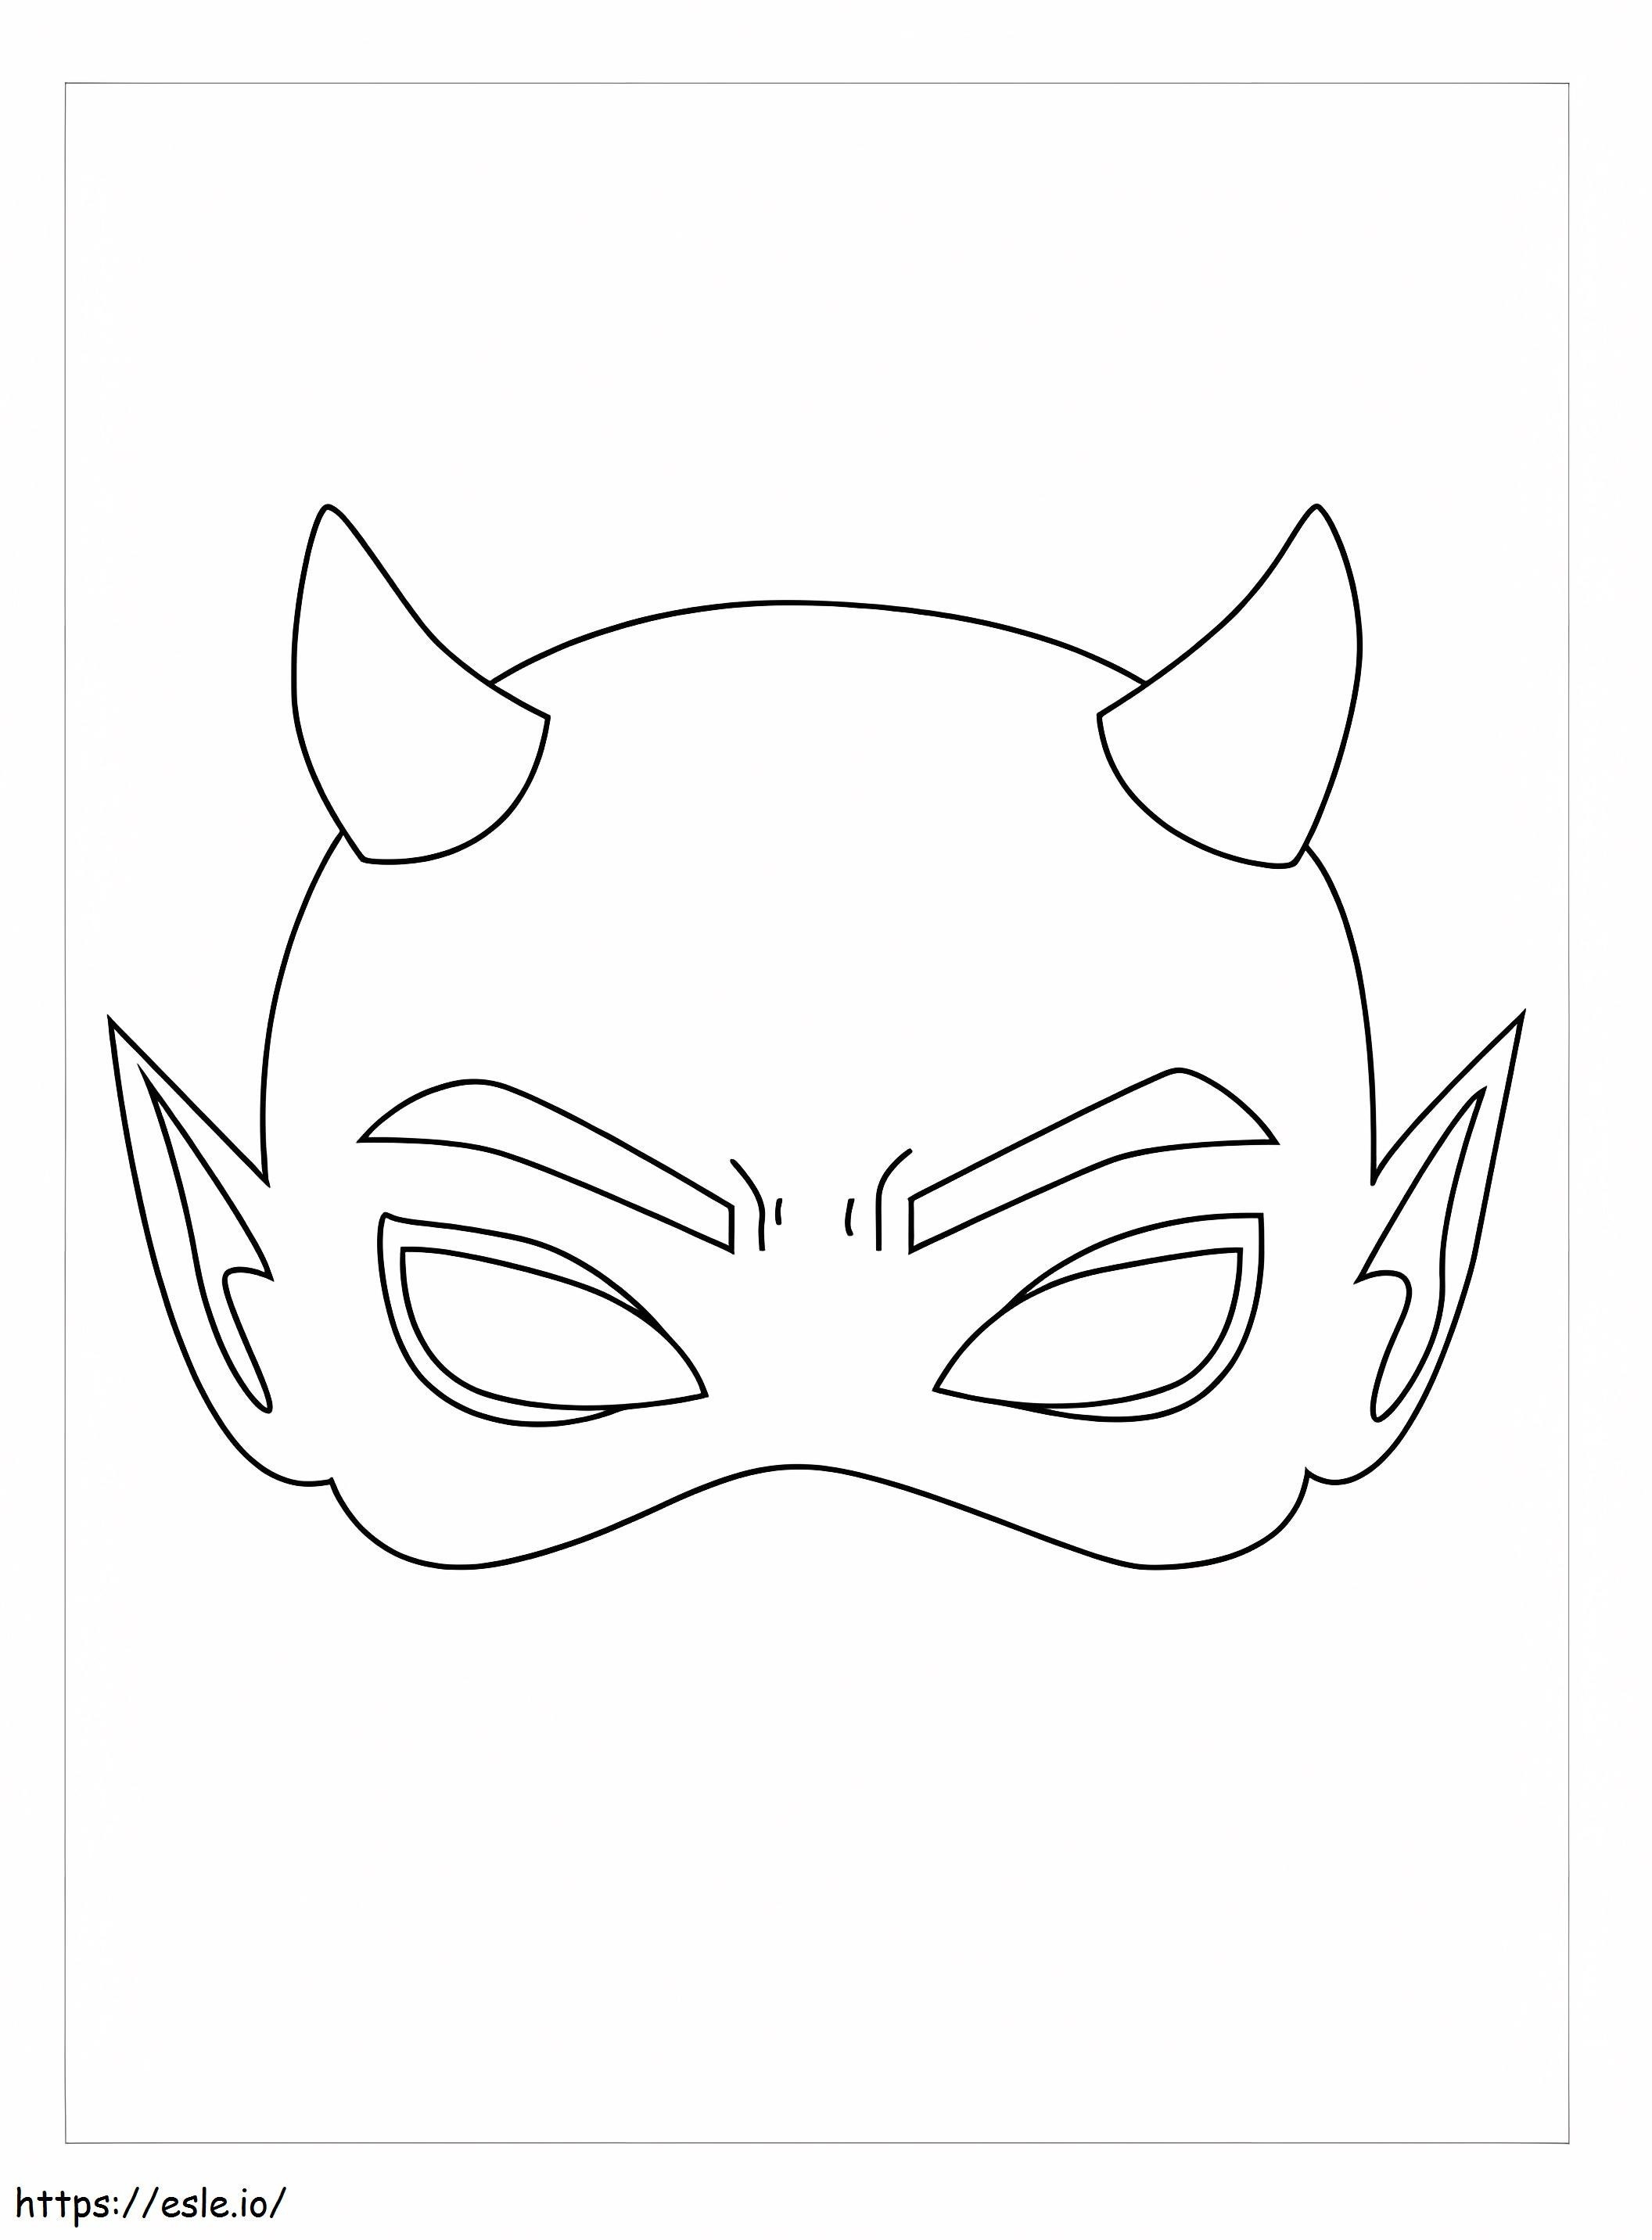 Devil Mask coloring page